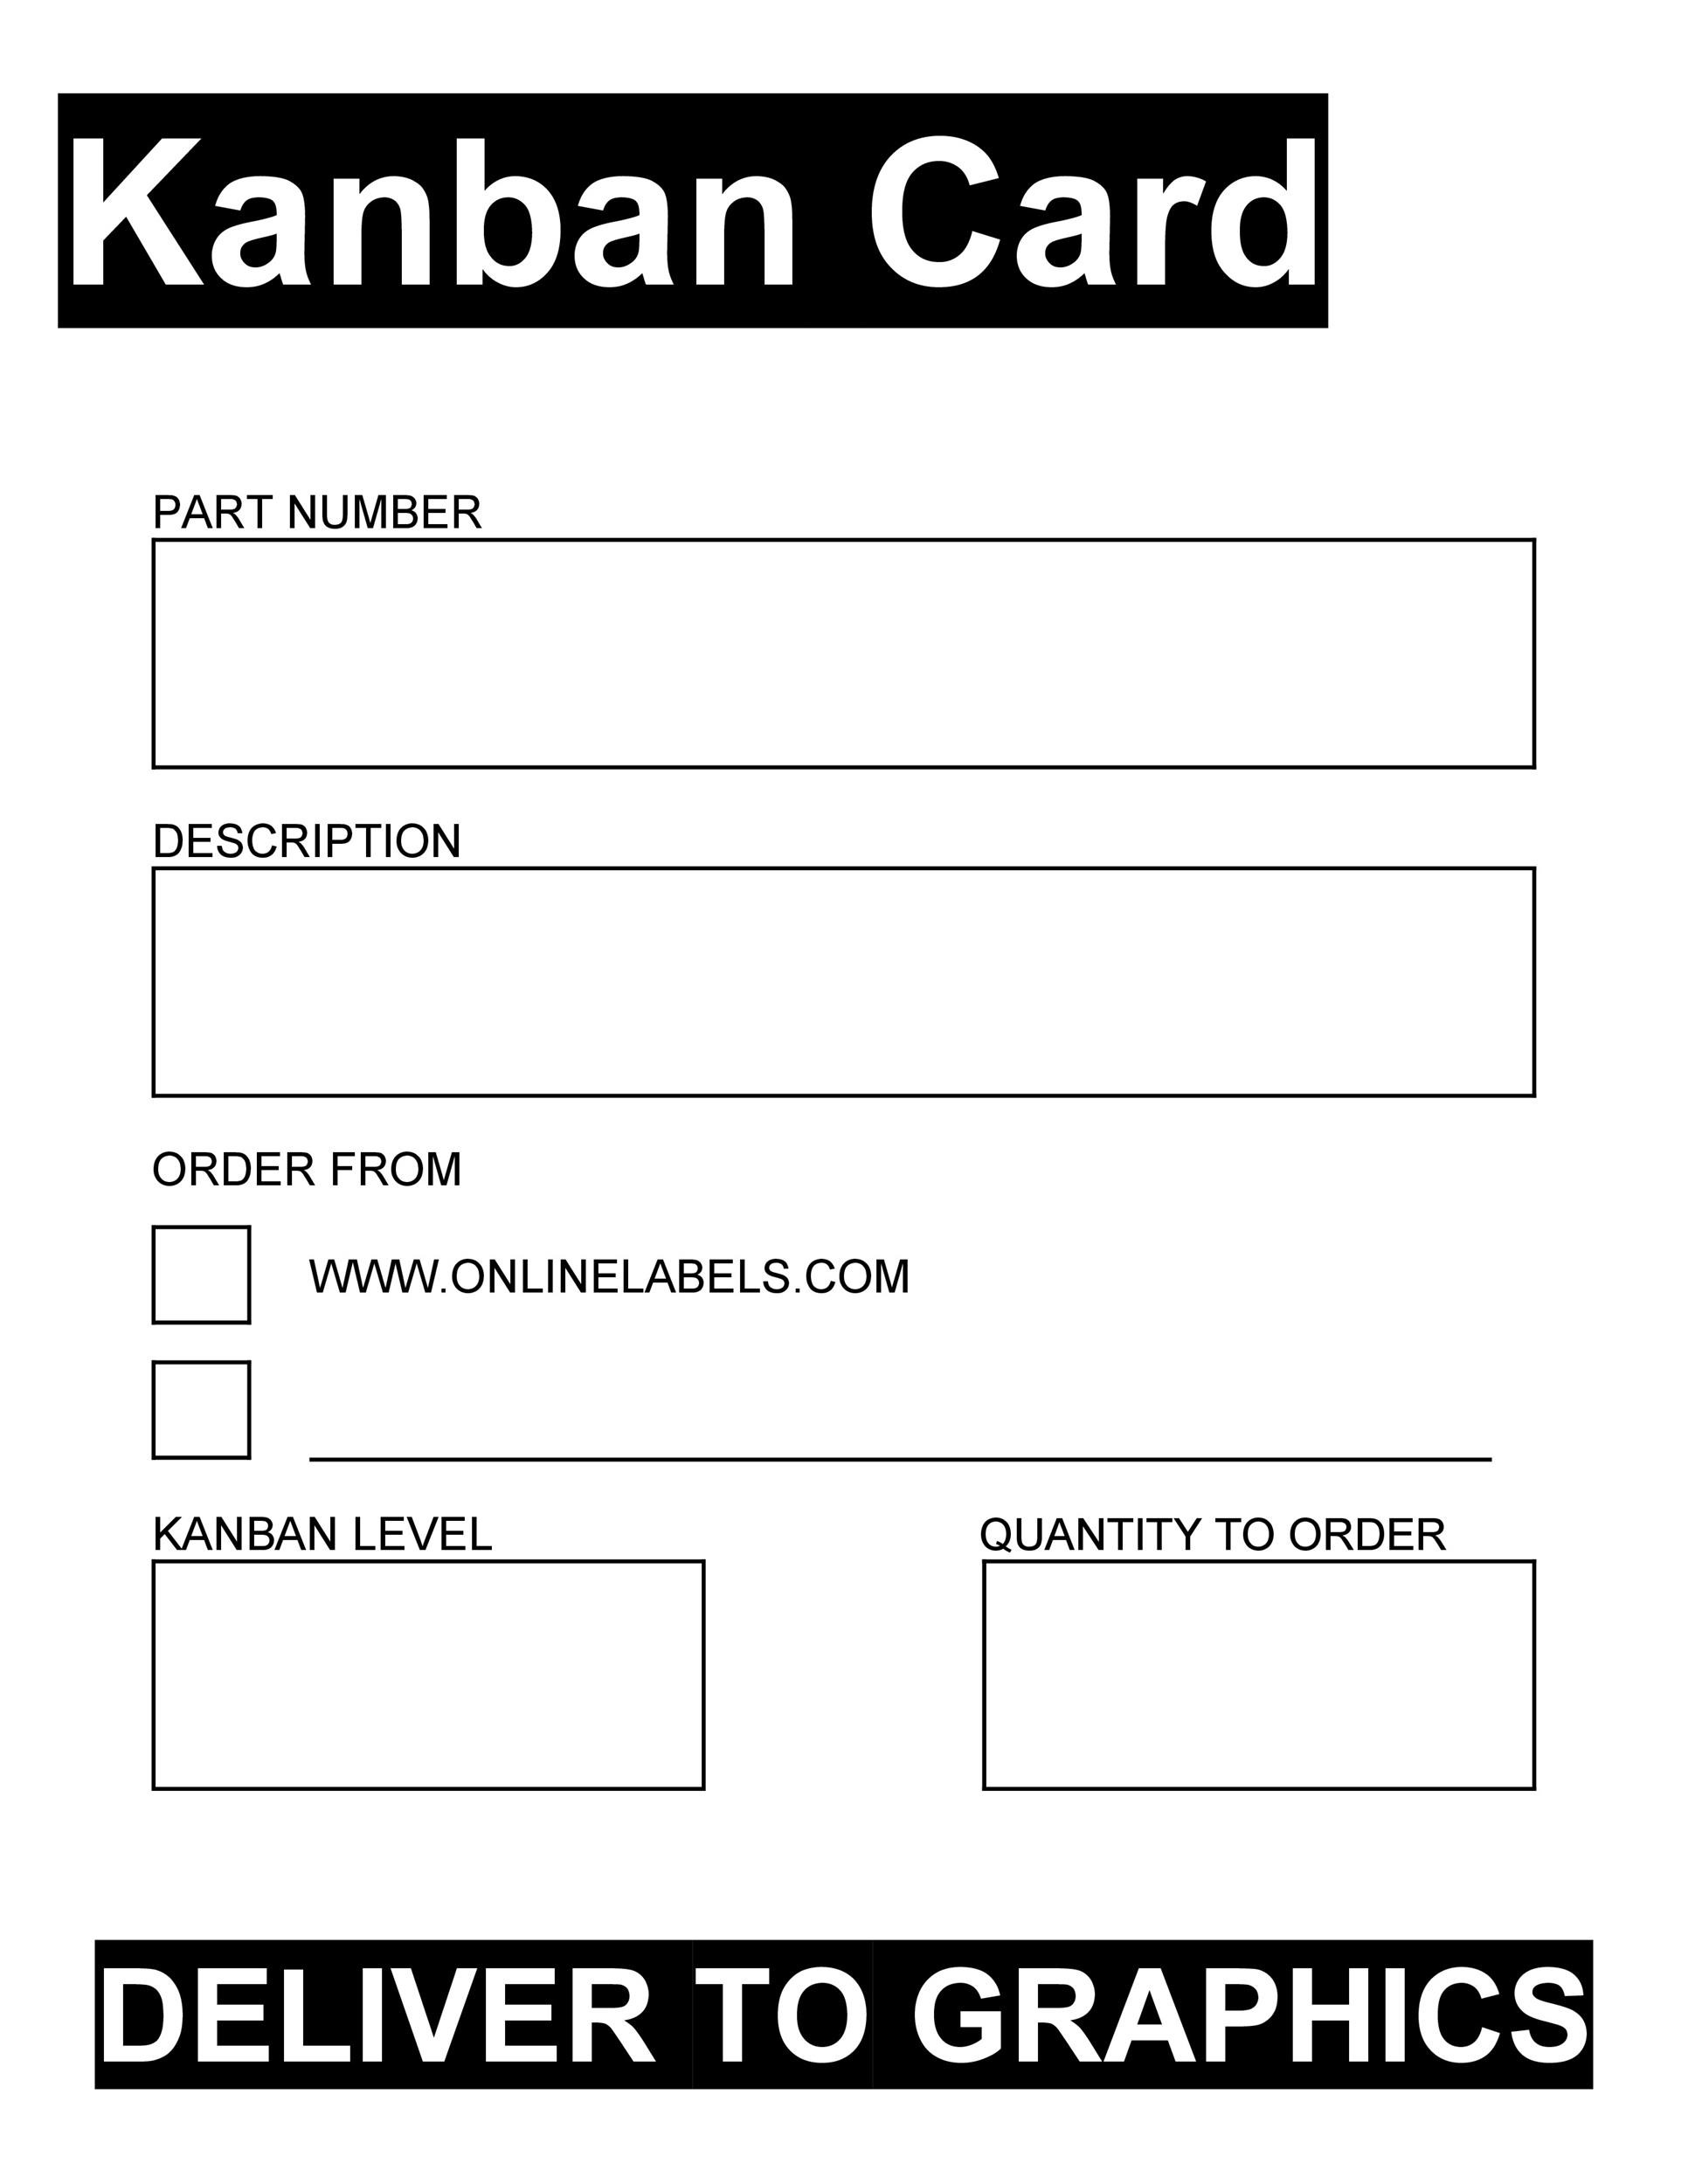 25 Printable Kanban Card Templates ( How to use them) ᐅ TemplateLab